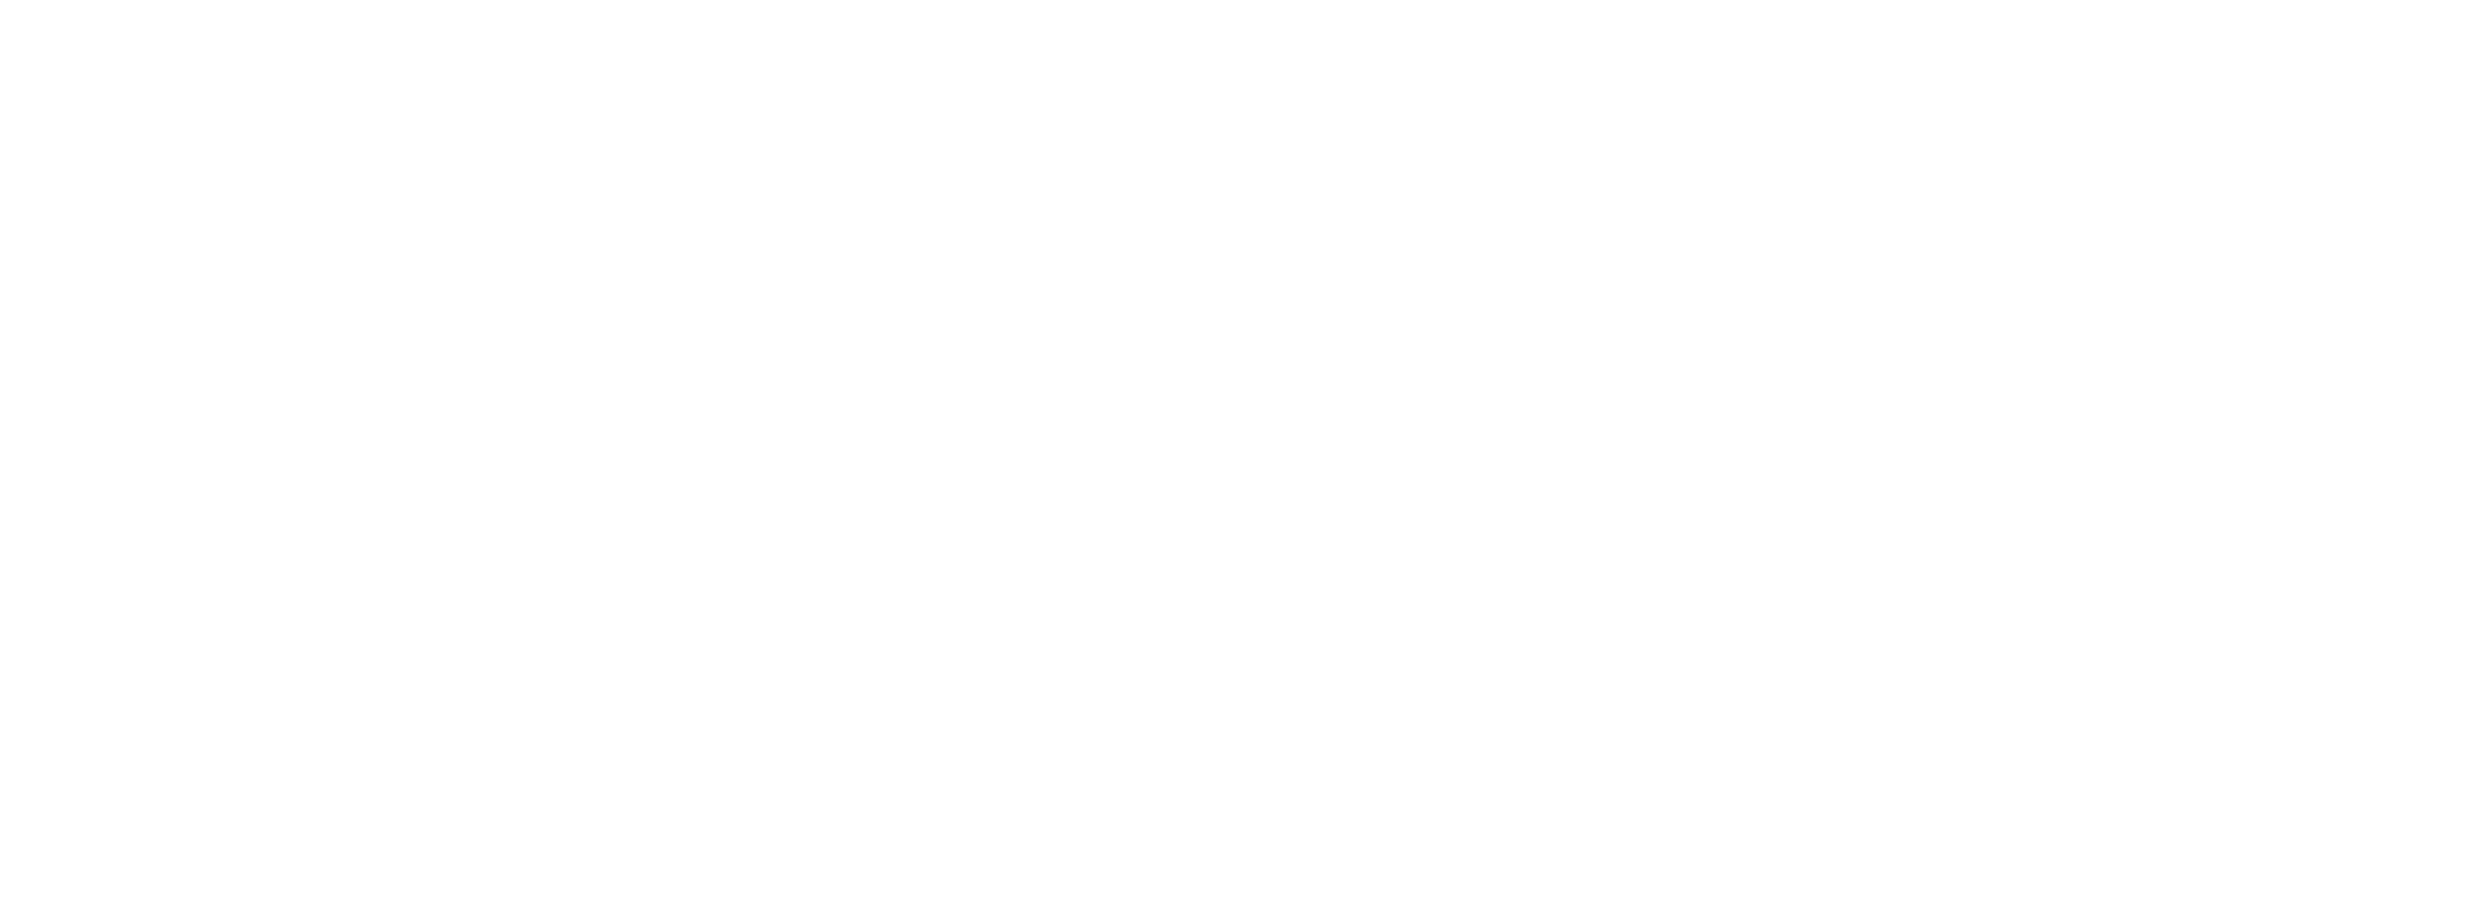 Logo-grupo industrial cl